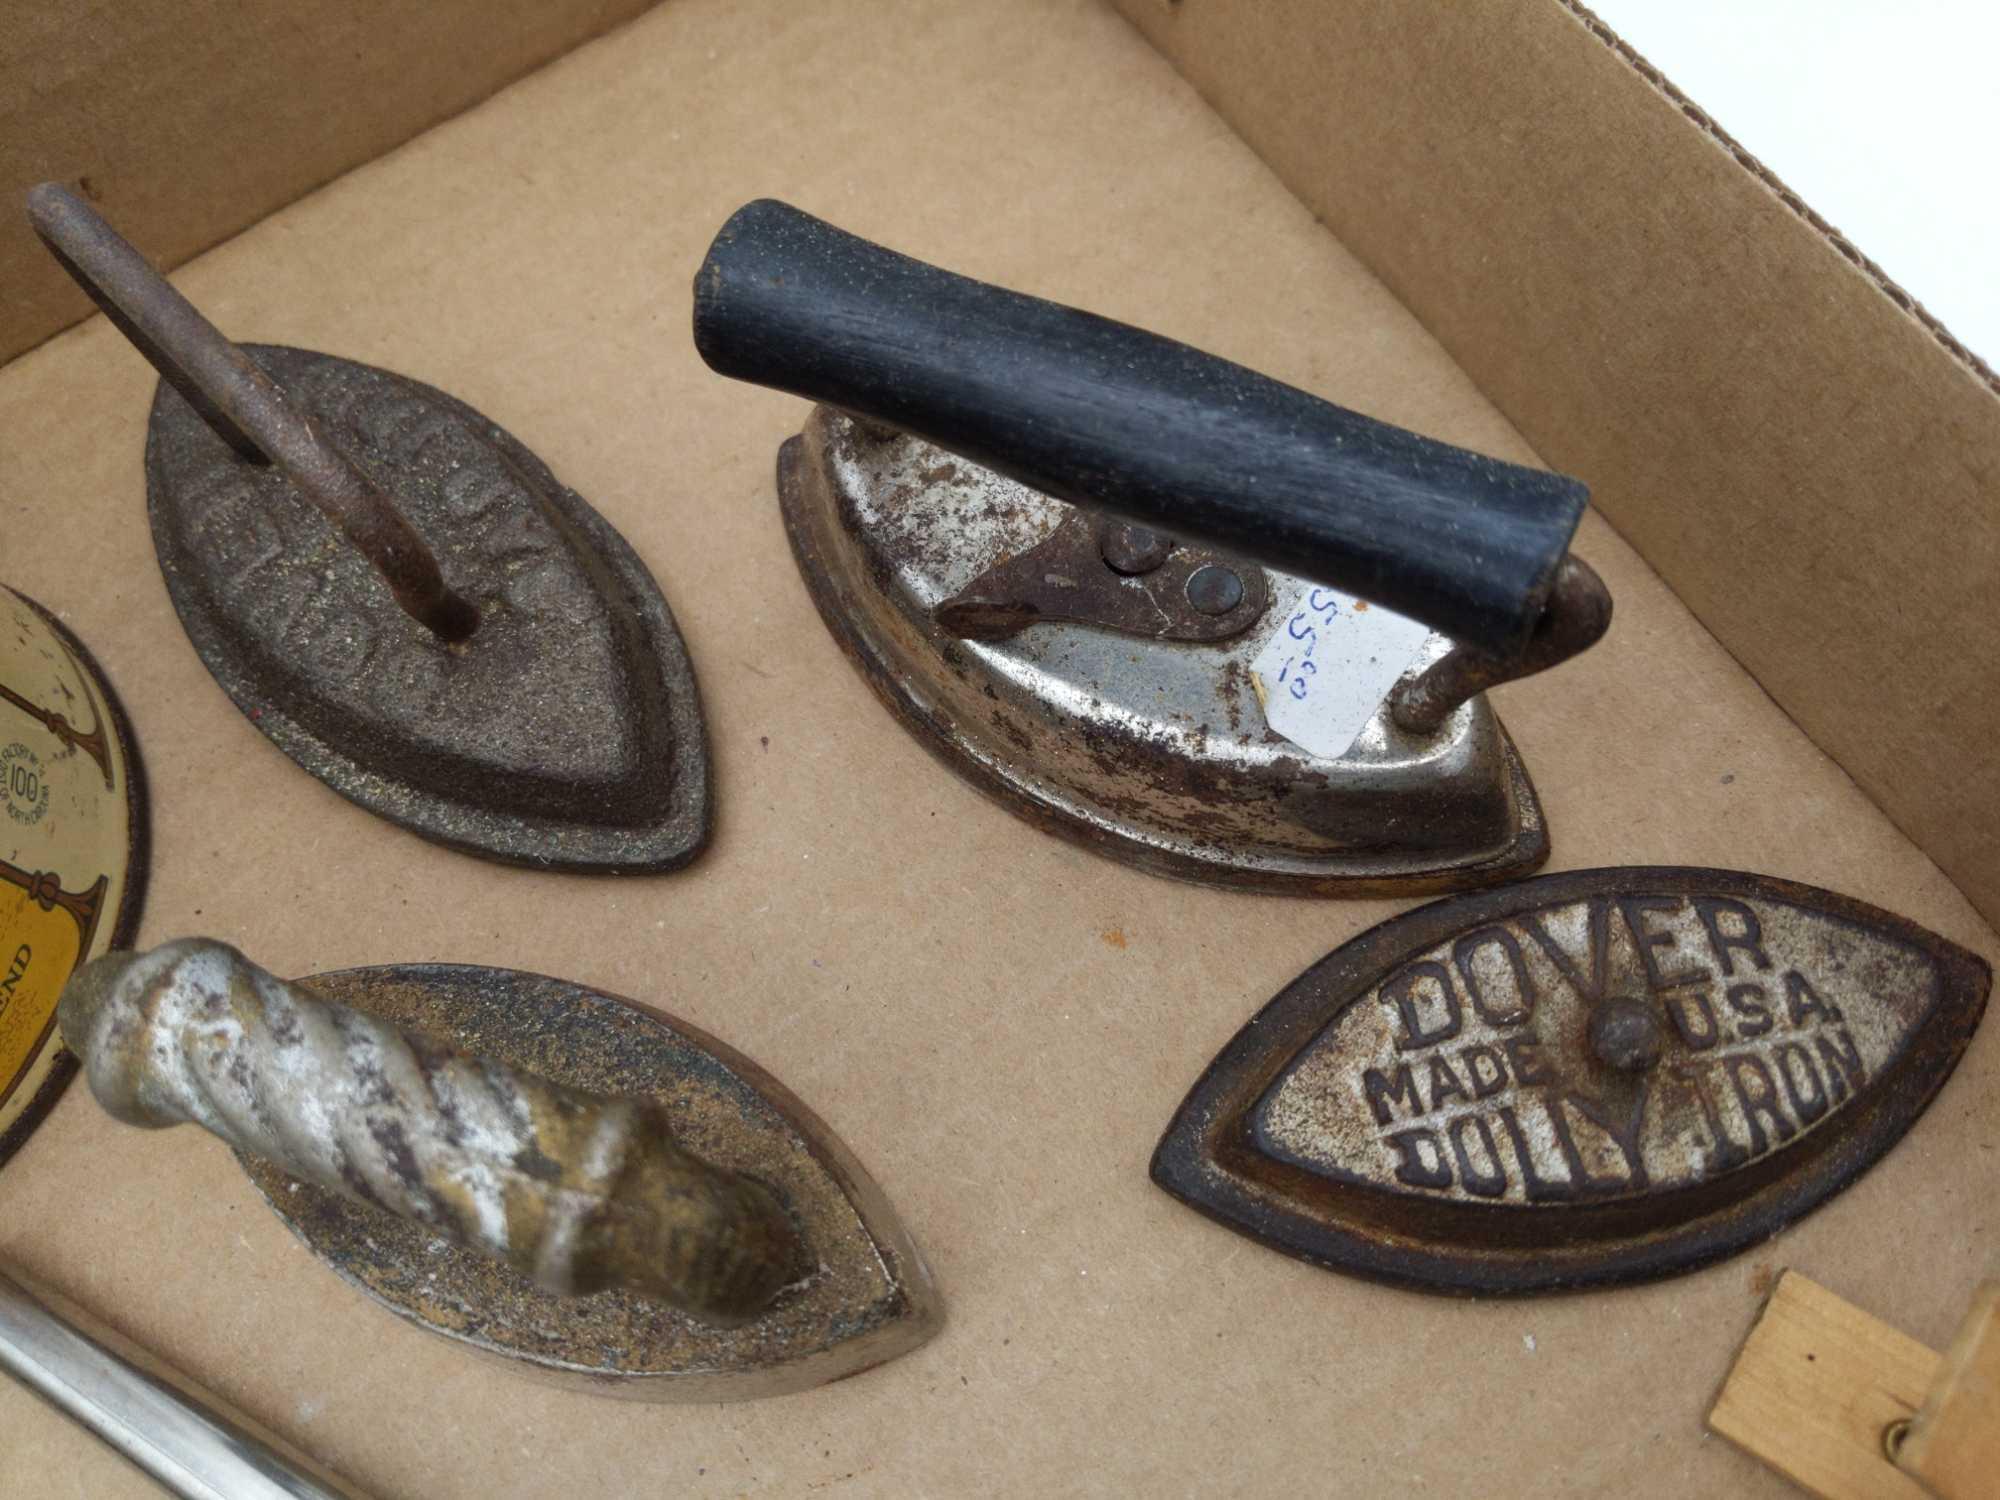 Vintage Curling Iron, Irons ,Camel Can, Watkins Ruler